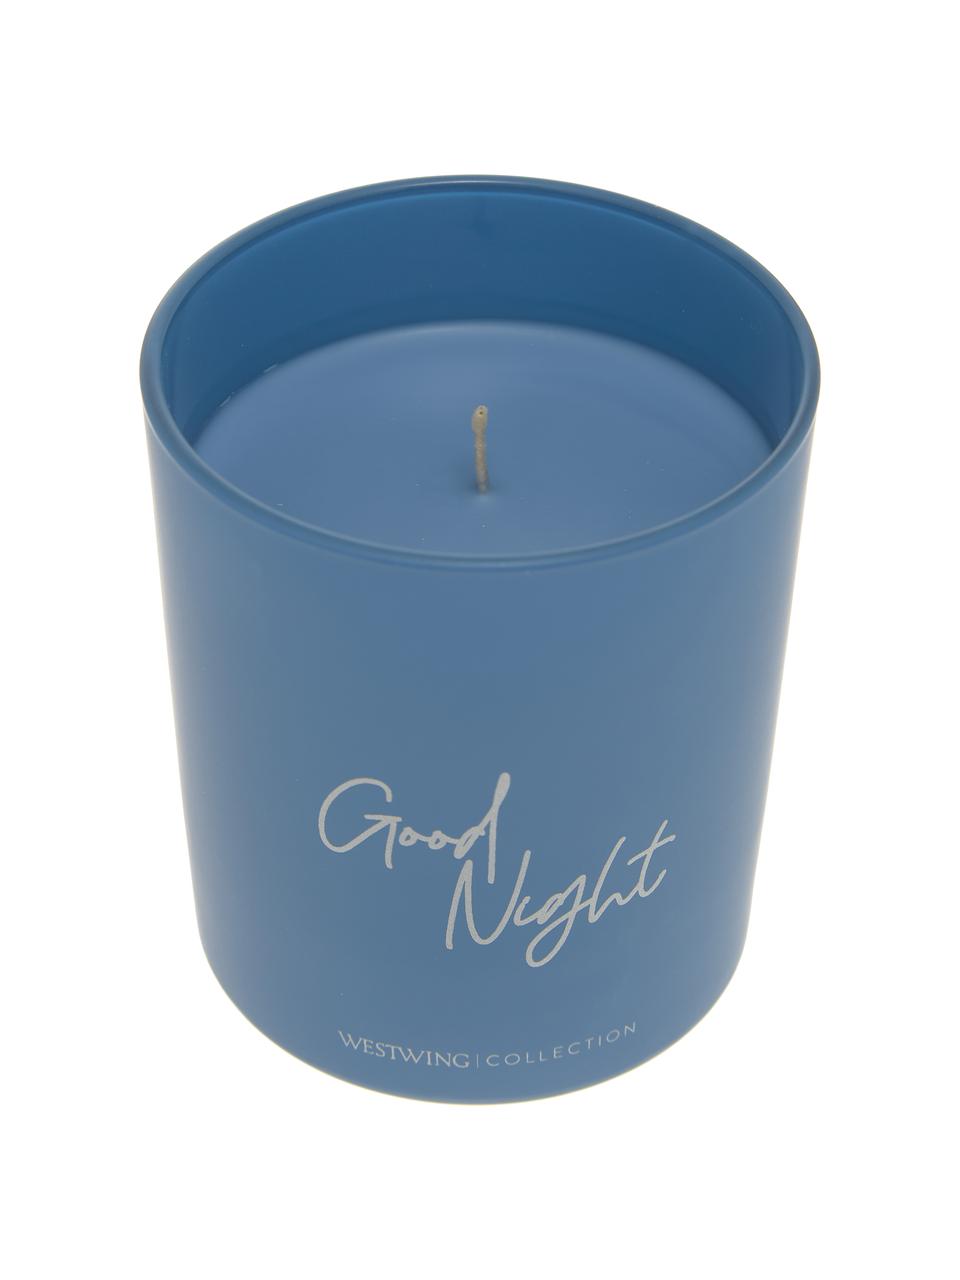 Bougie parfumée Good Night : Airy Lavender, Bleu